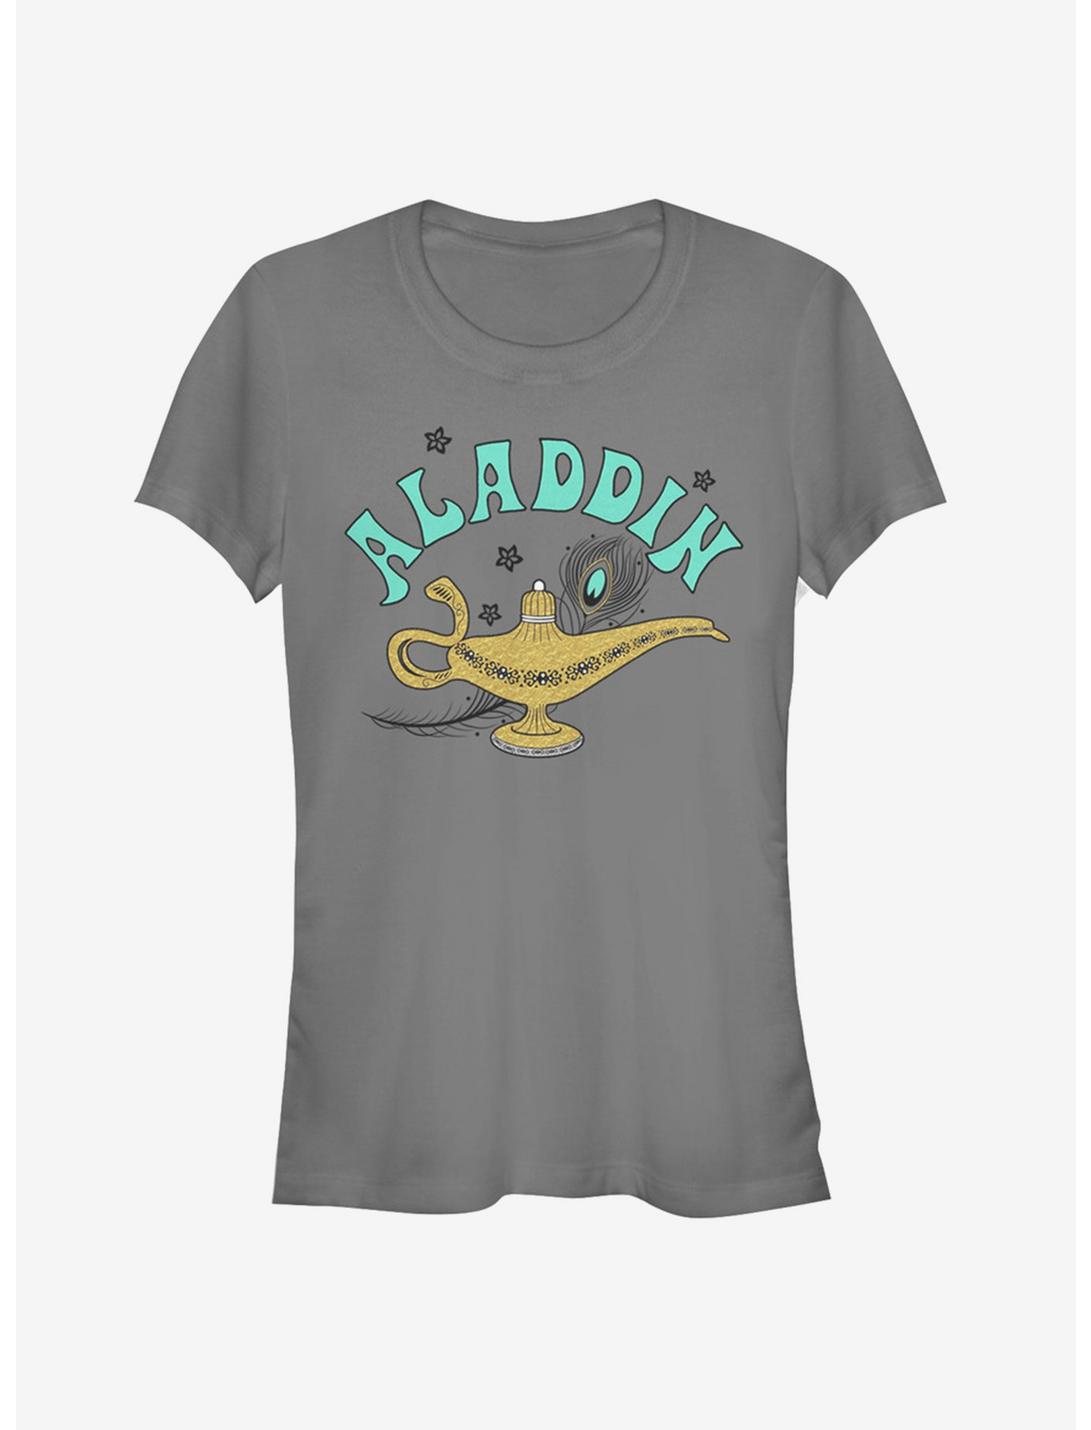 Disney Aladdin 2019 Aladdin Lamp Girls T-Shirt, CHARCOAL, hi-res